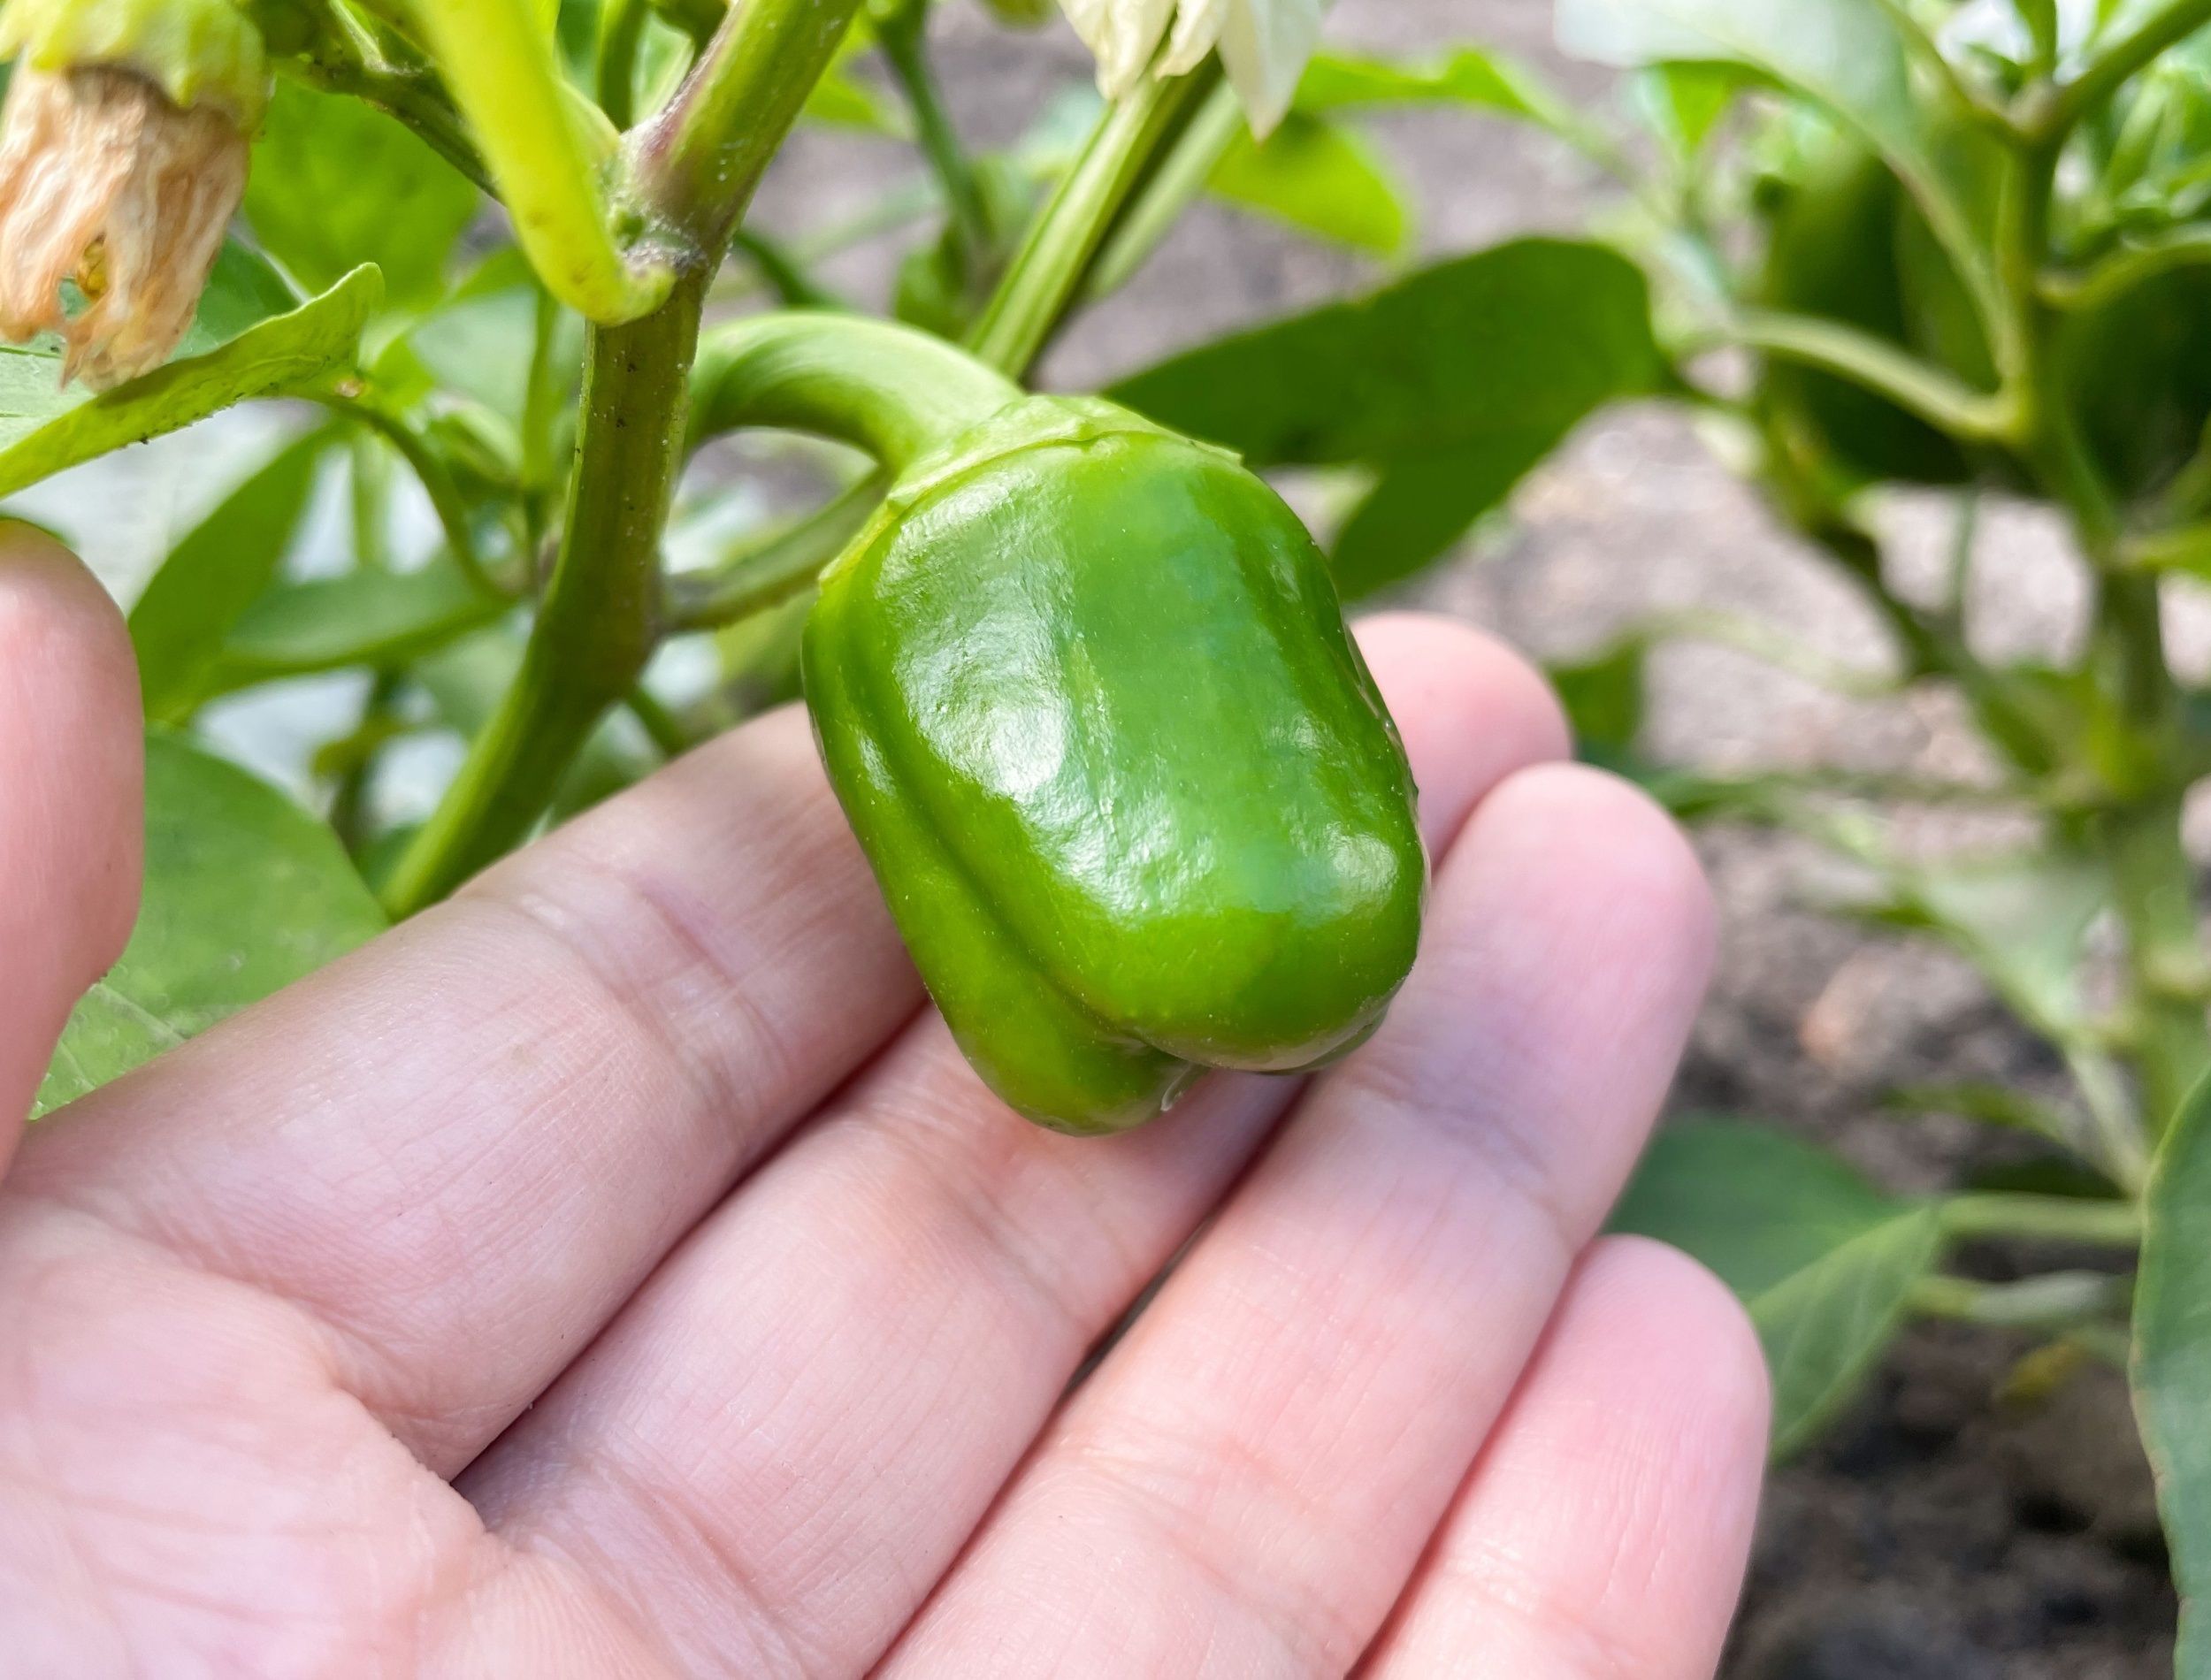 Sweet green mini pepper growing in the vegetable garden. Ripe bell pepper in the garden. Cultivation of vegetables